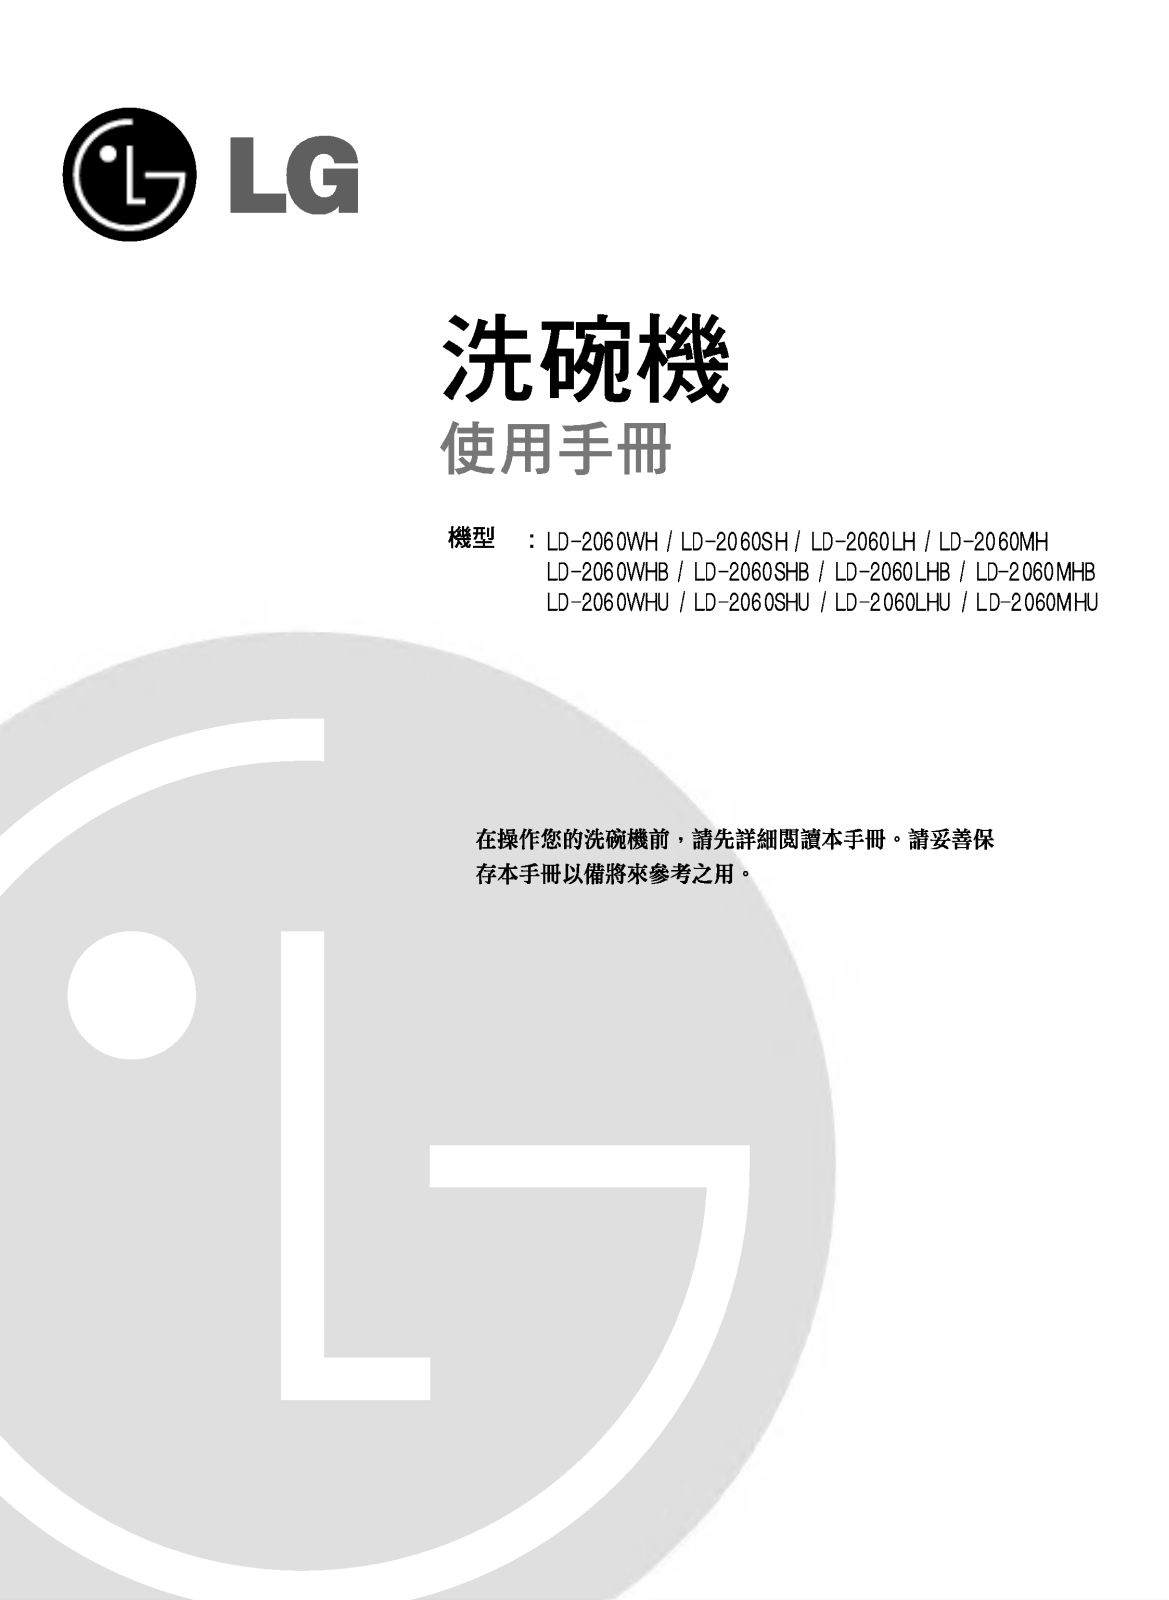 LG LD-2060MH User manual